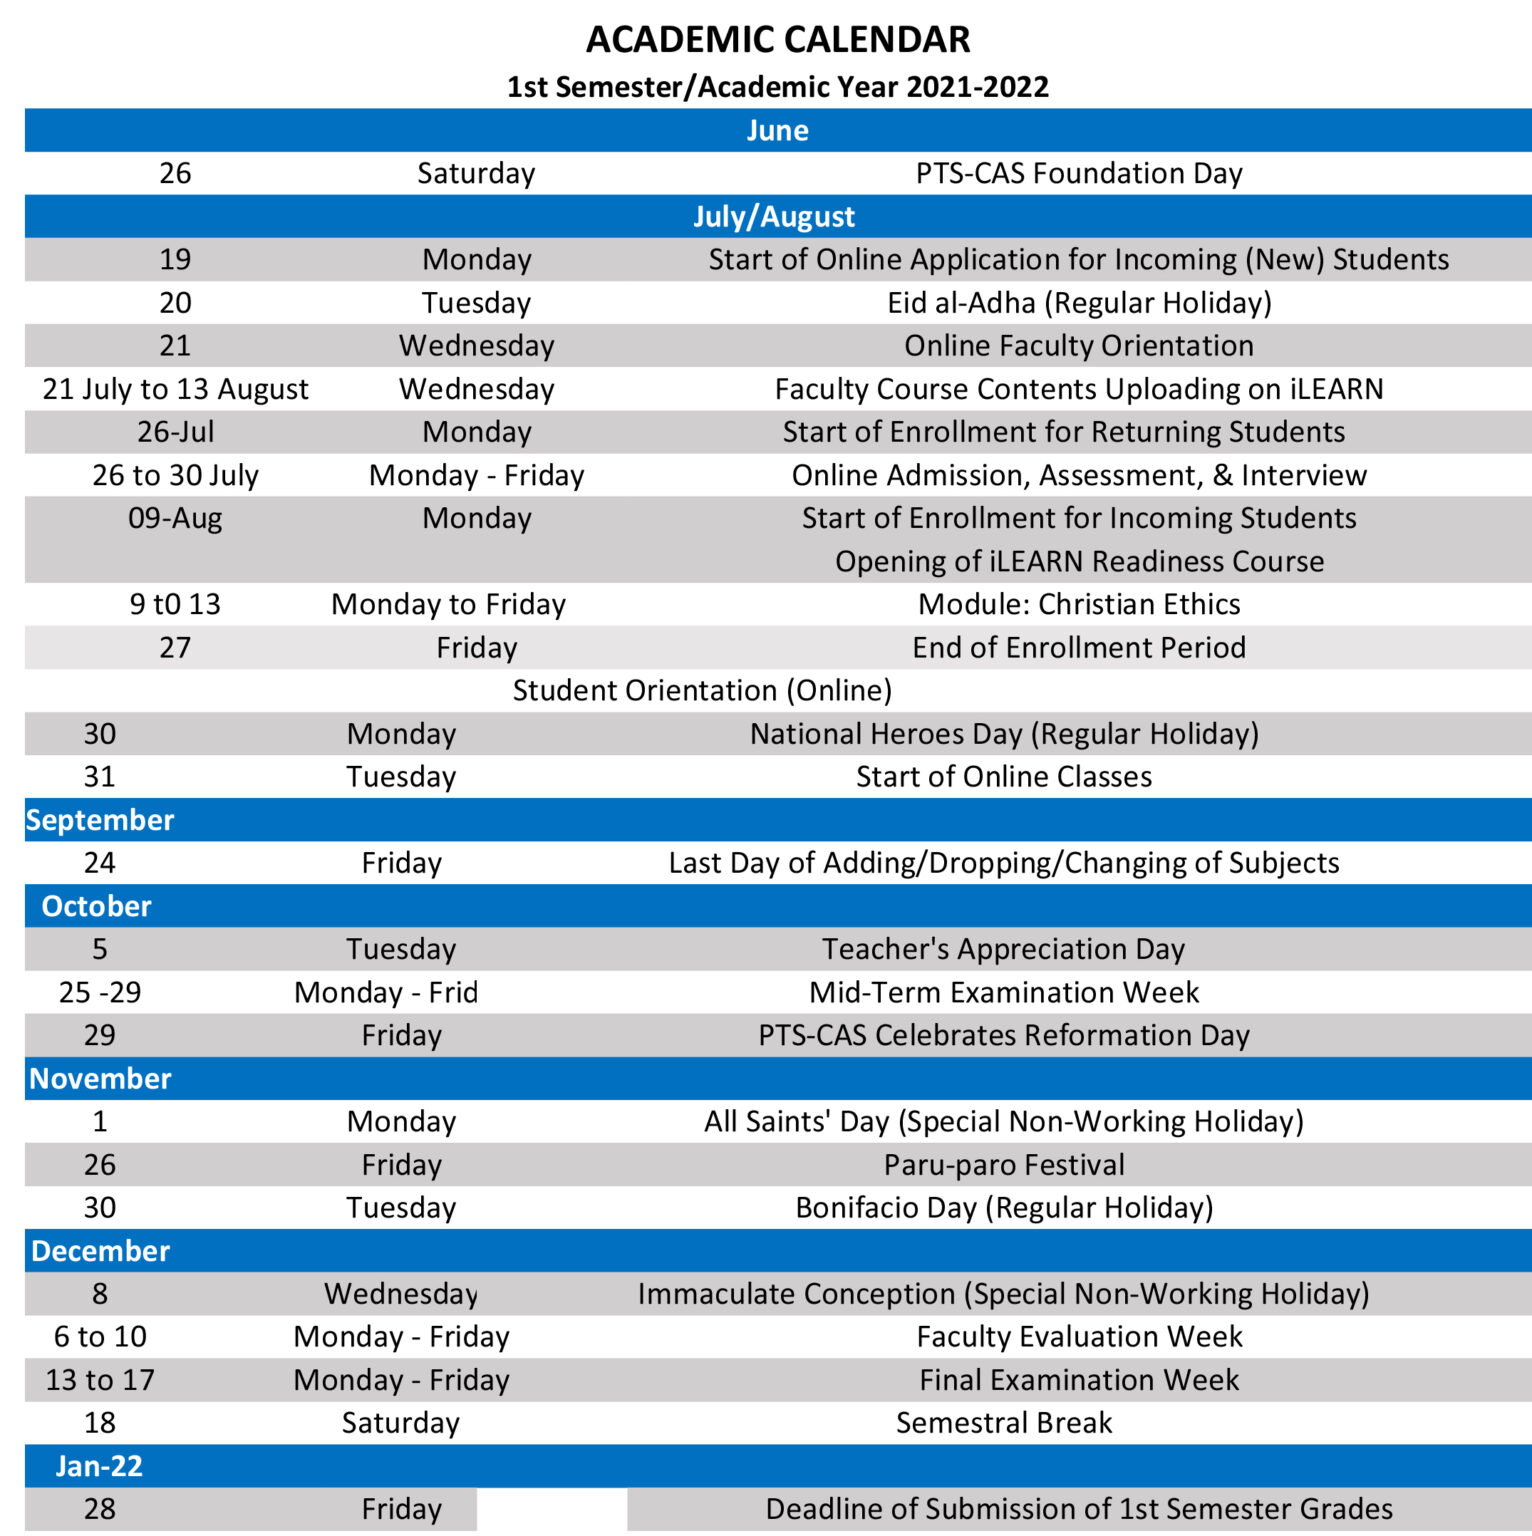 Academic Calendar | PTS College and Advanced Studies